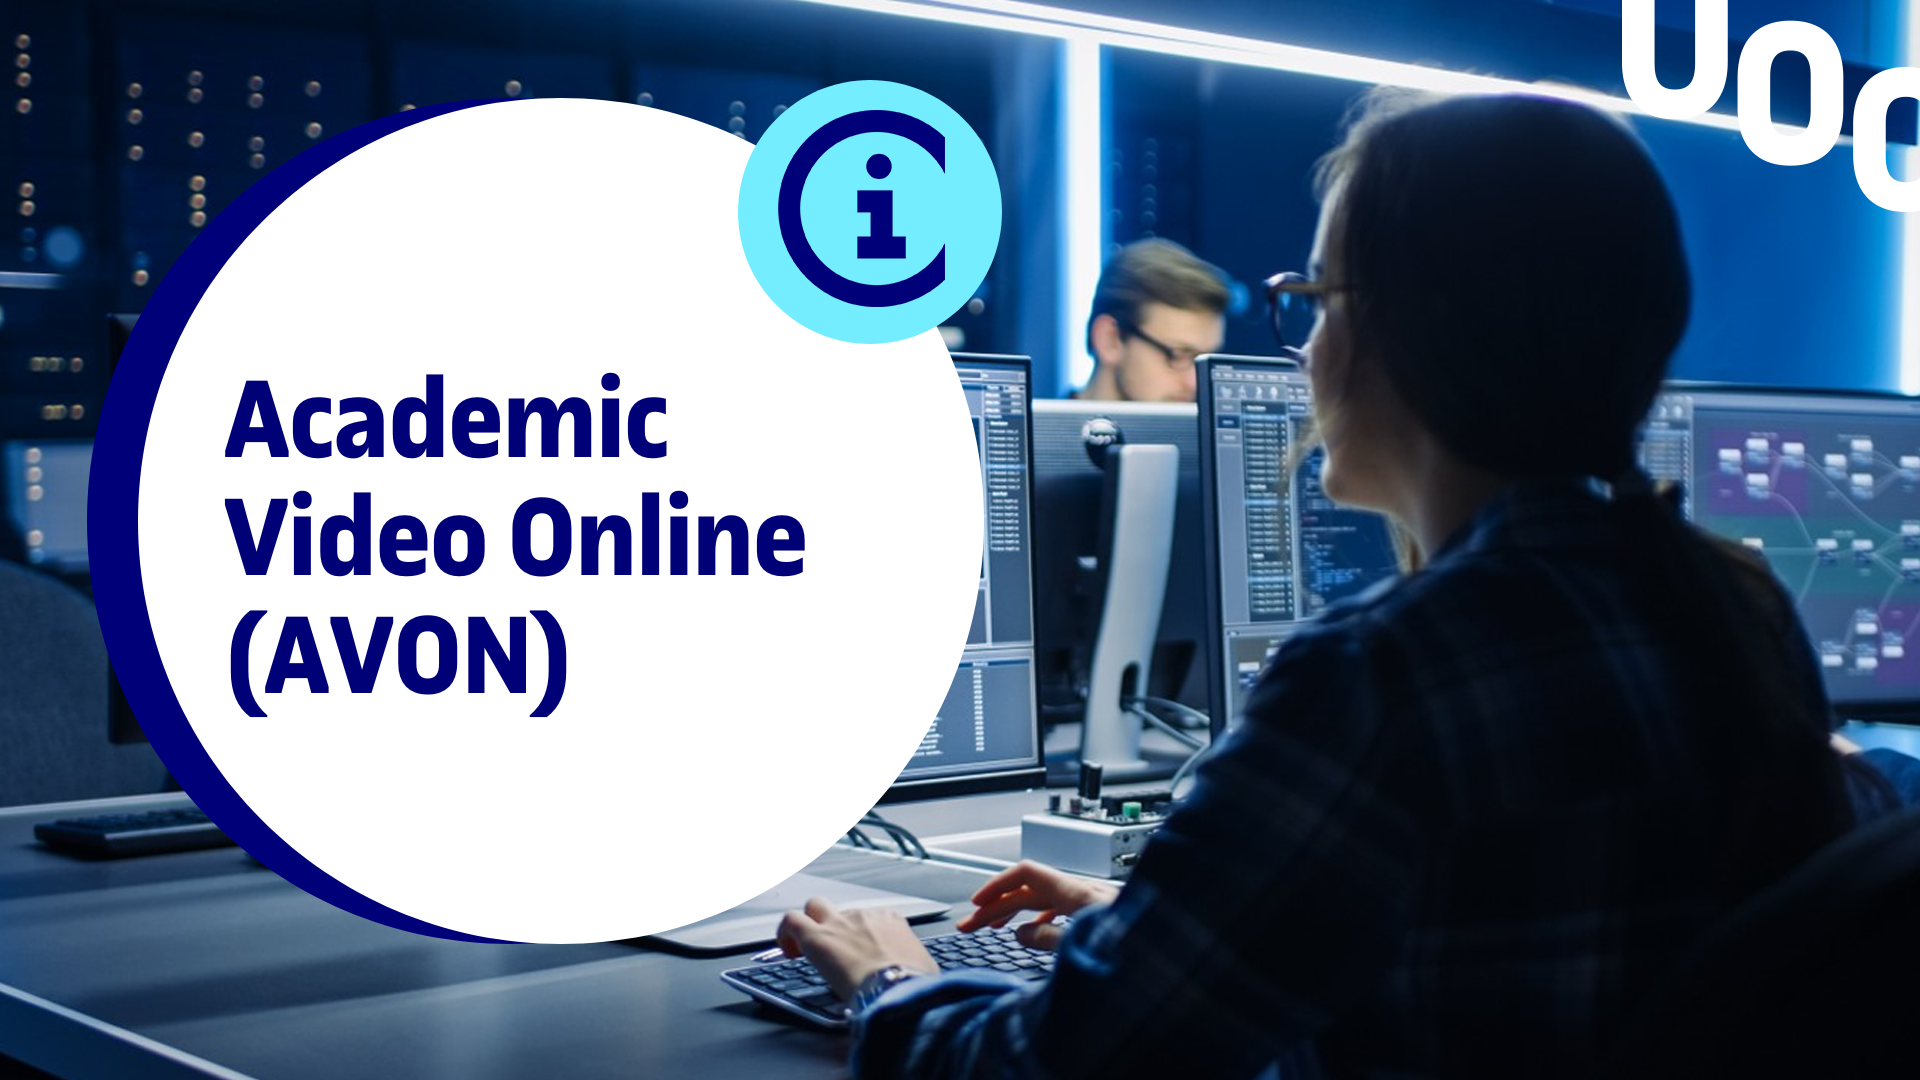 Formació UOC sobre la plataforma Academic Video Online (AVON) | UOC